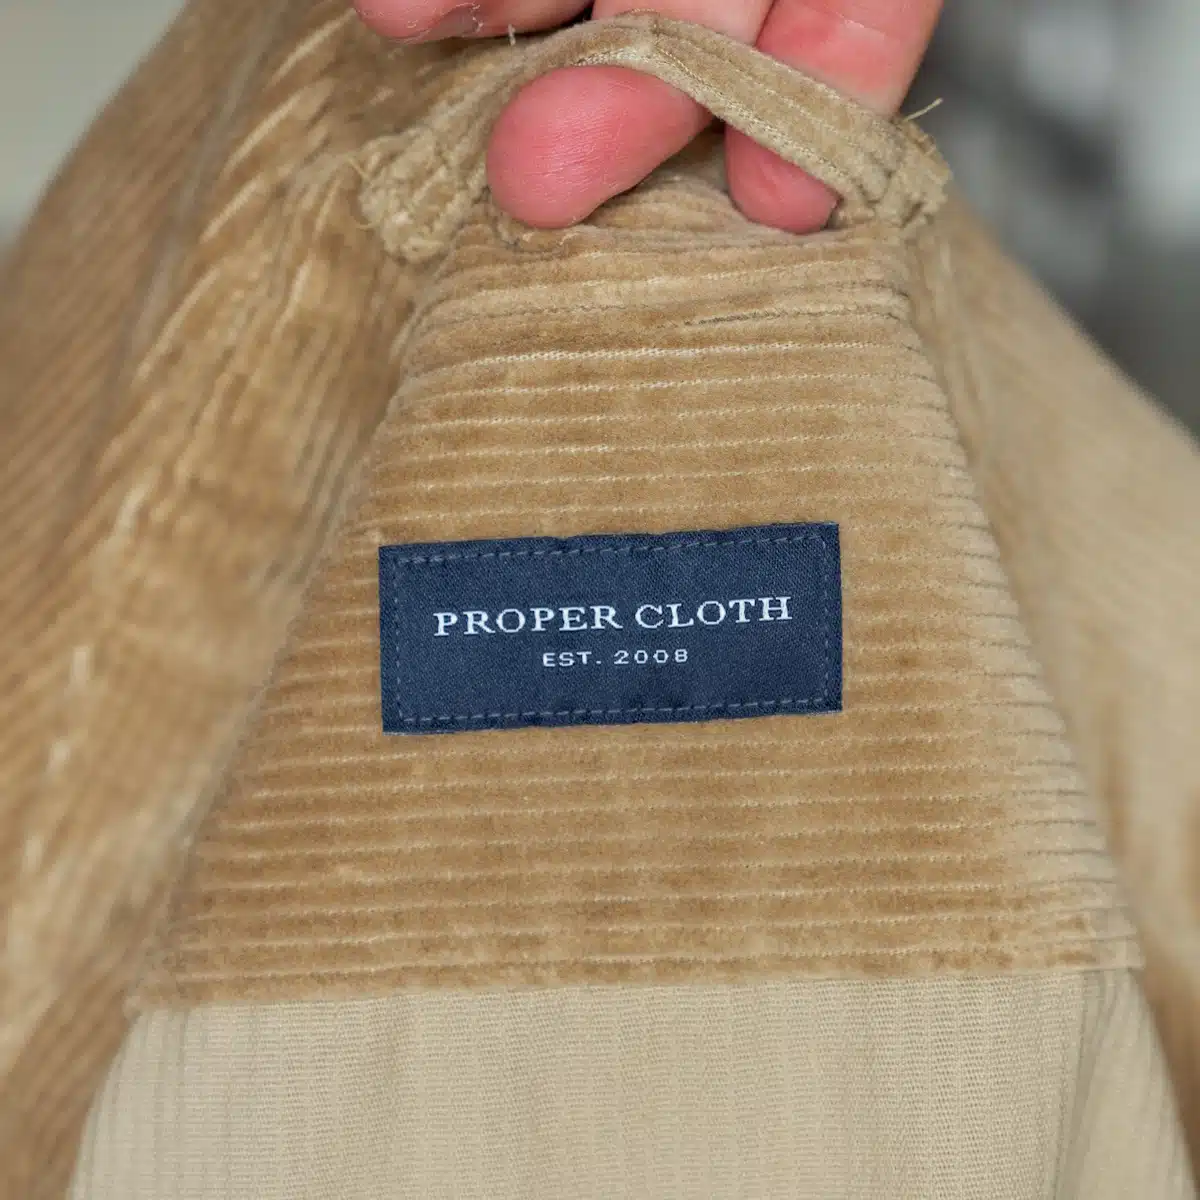 Proper Cloth Review: Affordable Custom Clothes?